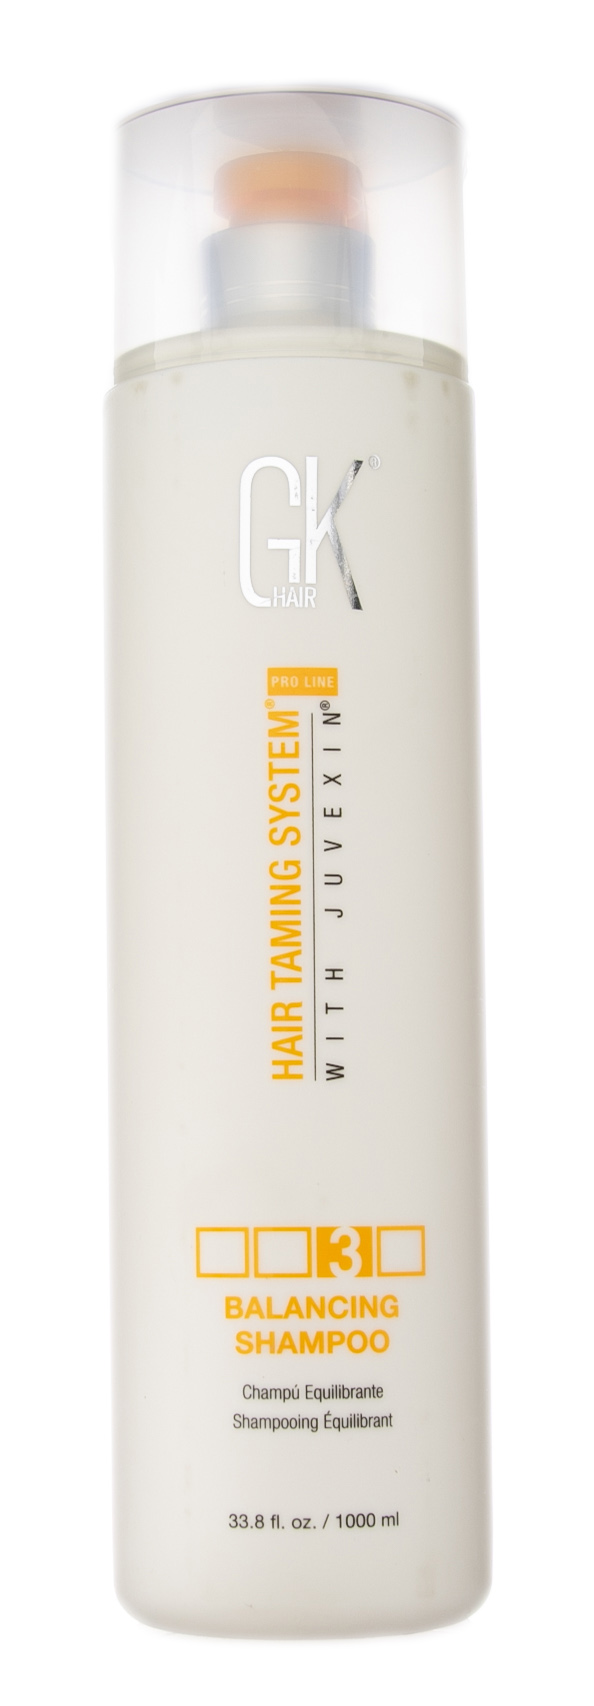 Global Keratin Шампунь балансирующий Balancing Shampoo, 1000 мл (Global Keratin, Шампуни и кондиционеры)